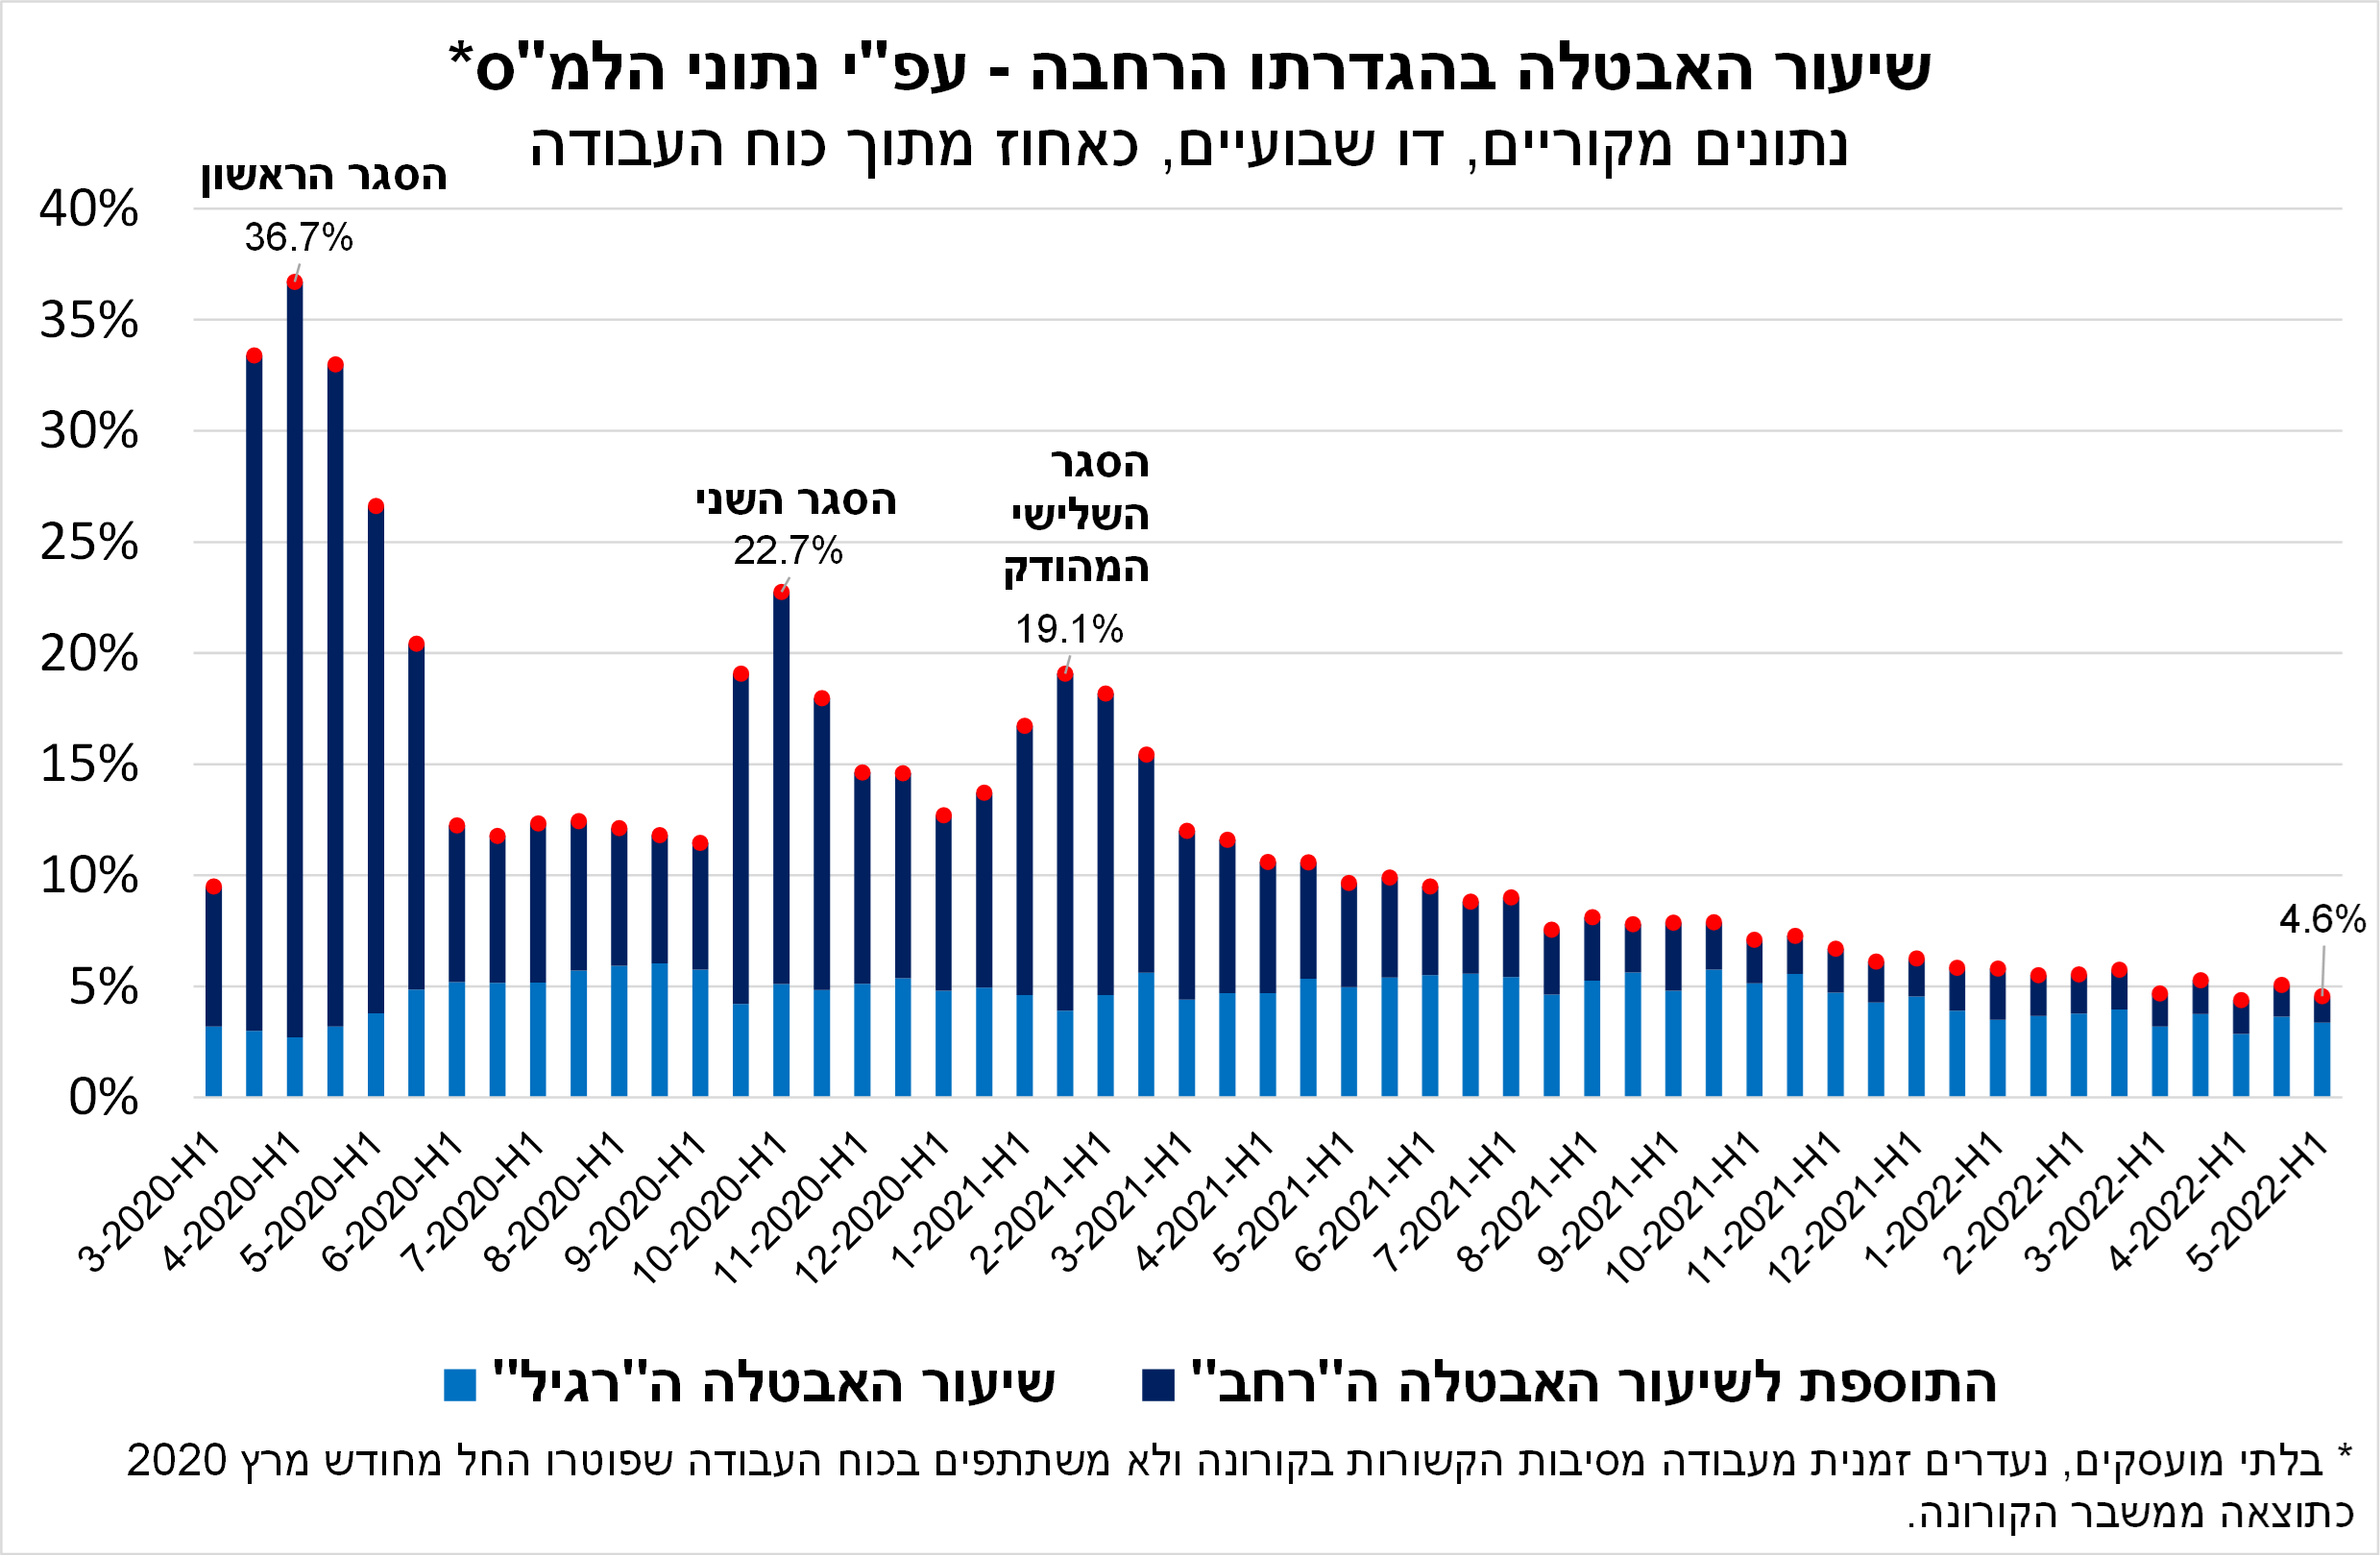  שיעור האבטלה בישראל